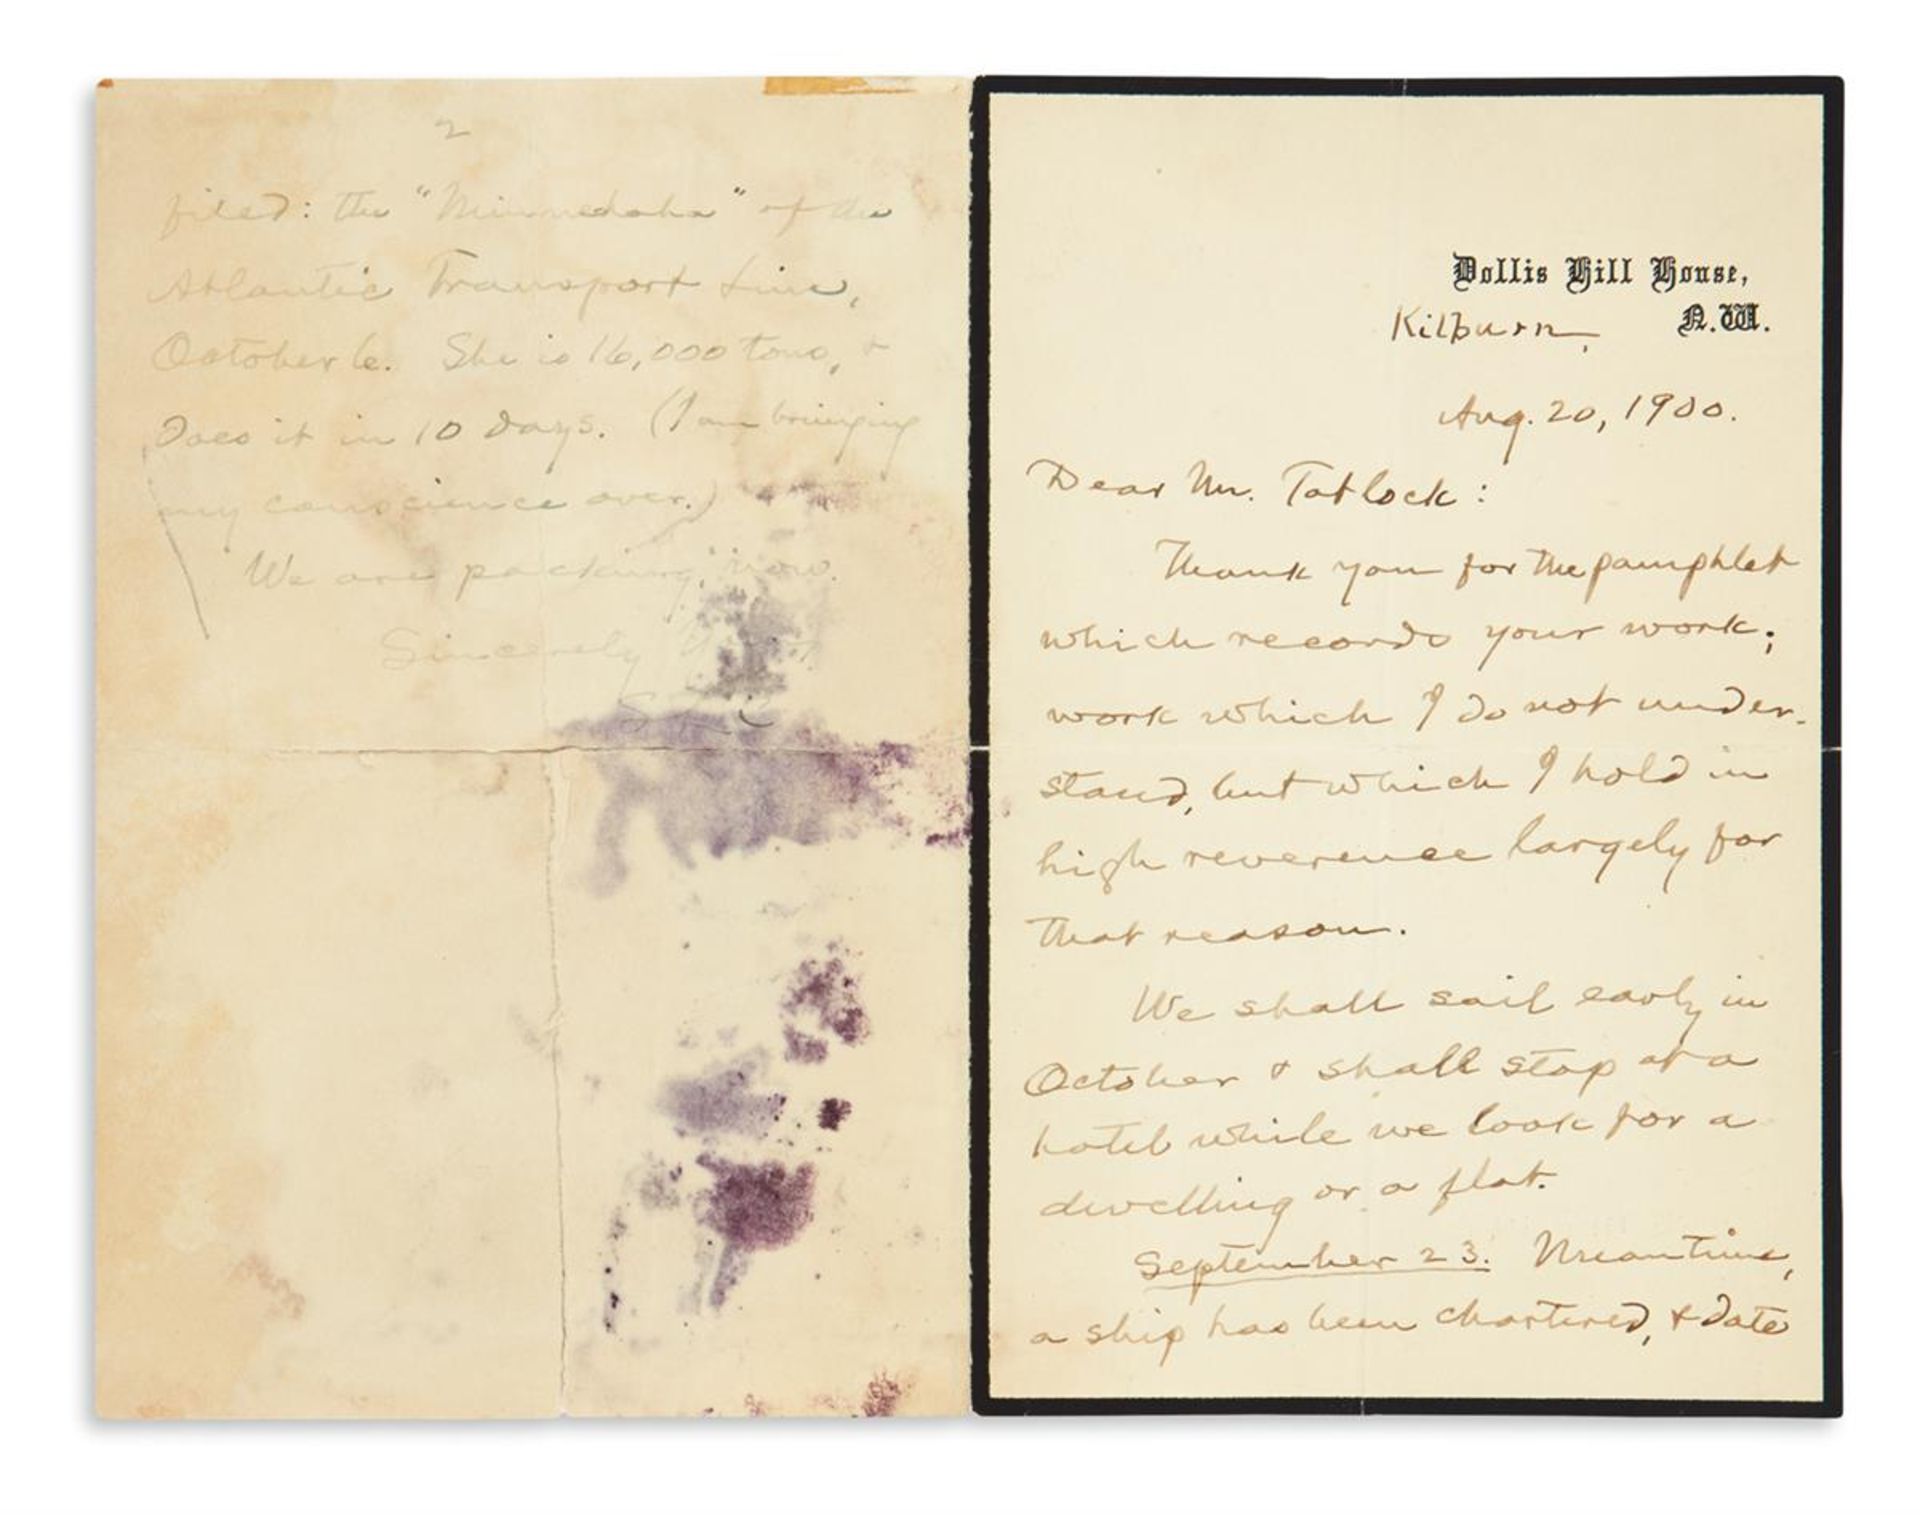 Mark Twain Signed Autograph Letter & Full Autograph (Samuel Clemens) - Image 2 of 4